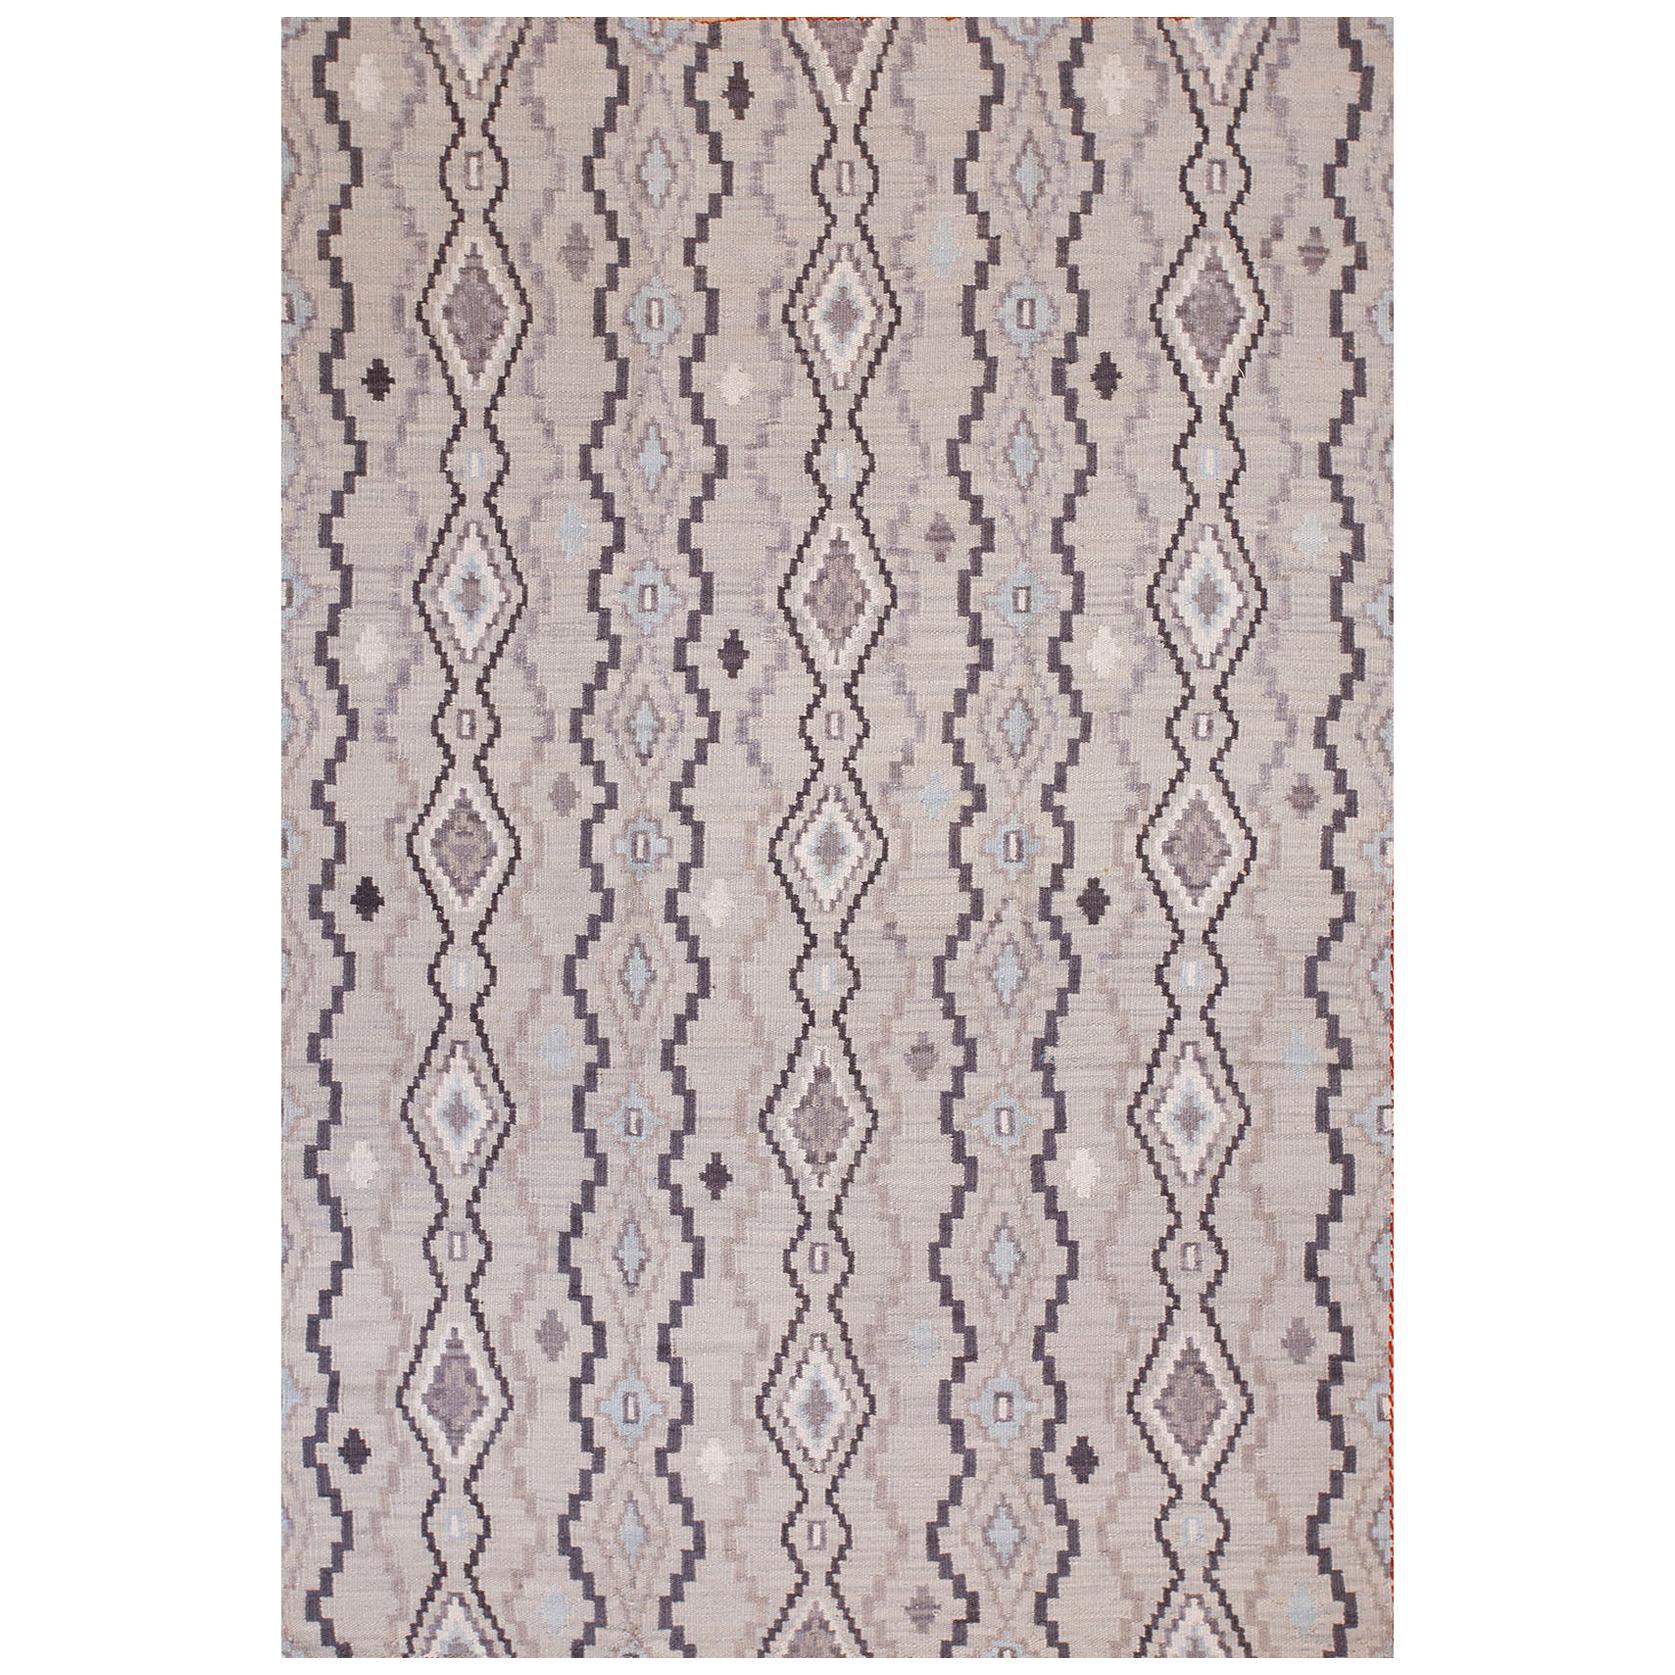 Contemporary Handwoven Navajo Style Flat Weave Carpet (6' x 9' - 183 x 274 cm)